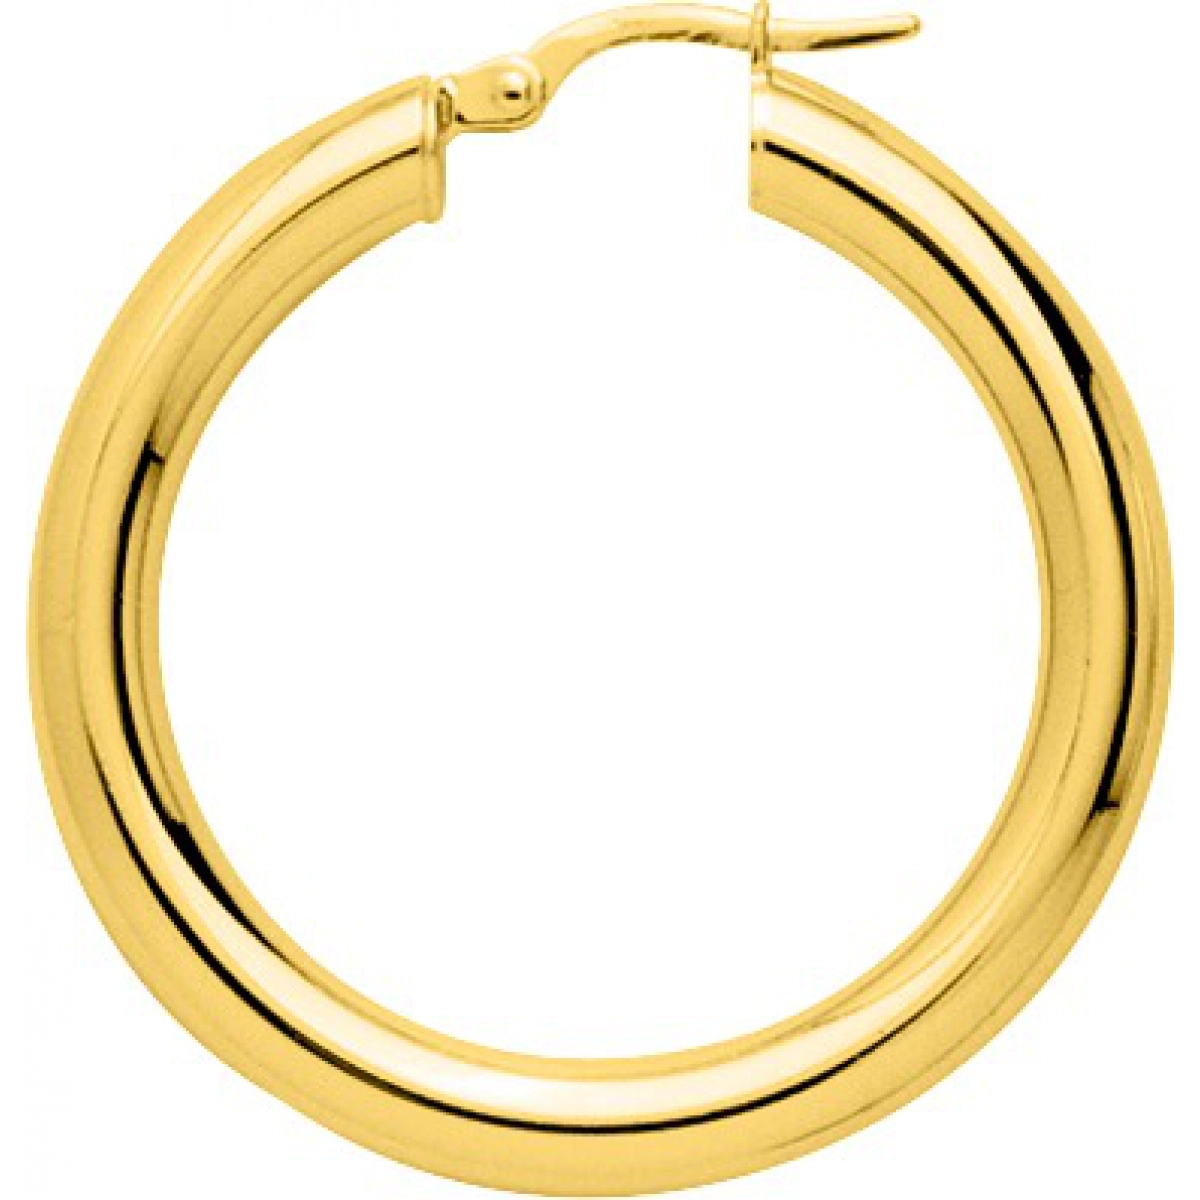 Hoops earrings pair gold plated Brass  Lua Blanca  105258.0